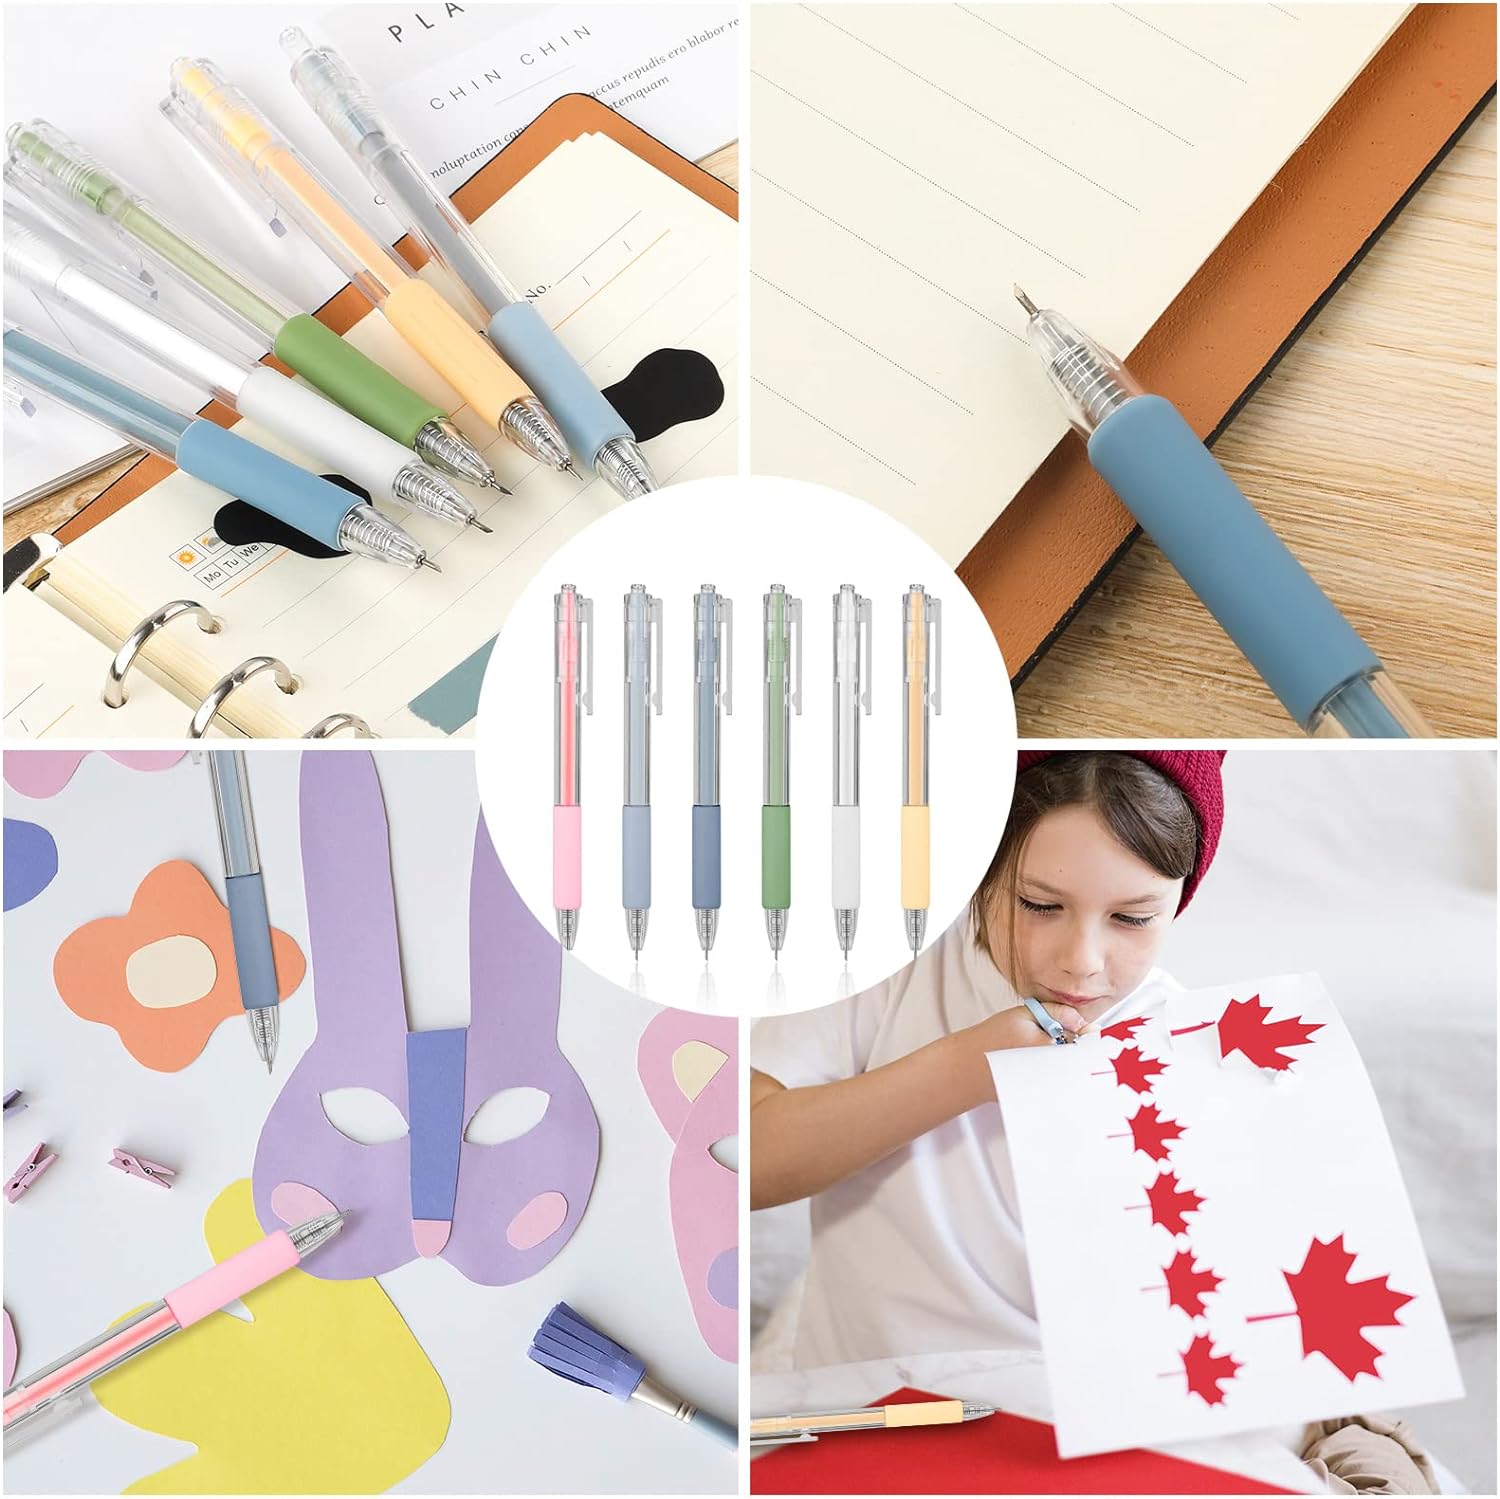 6pcs Craft Cutting Paper Pen Cutter Tool,ABS Resin Utility Knife Pen